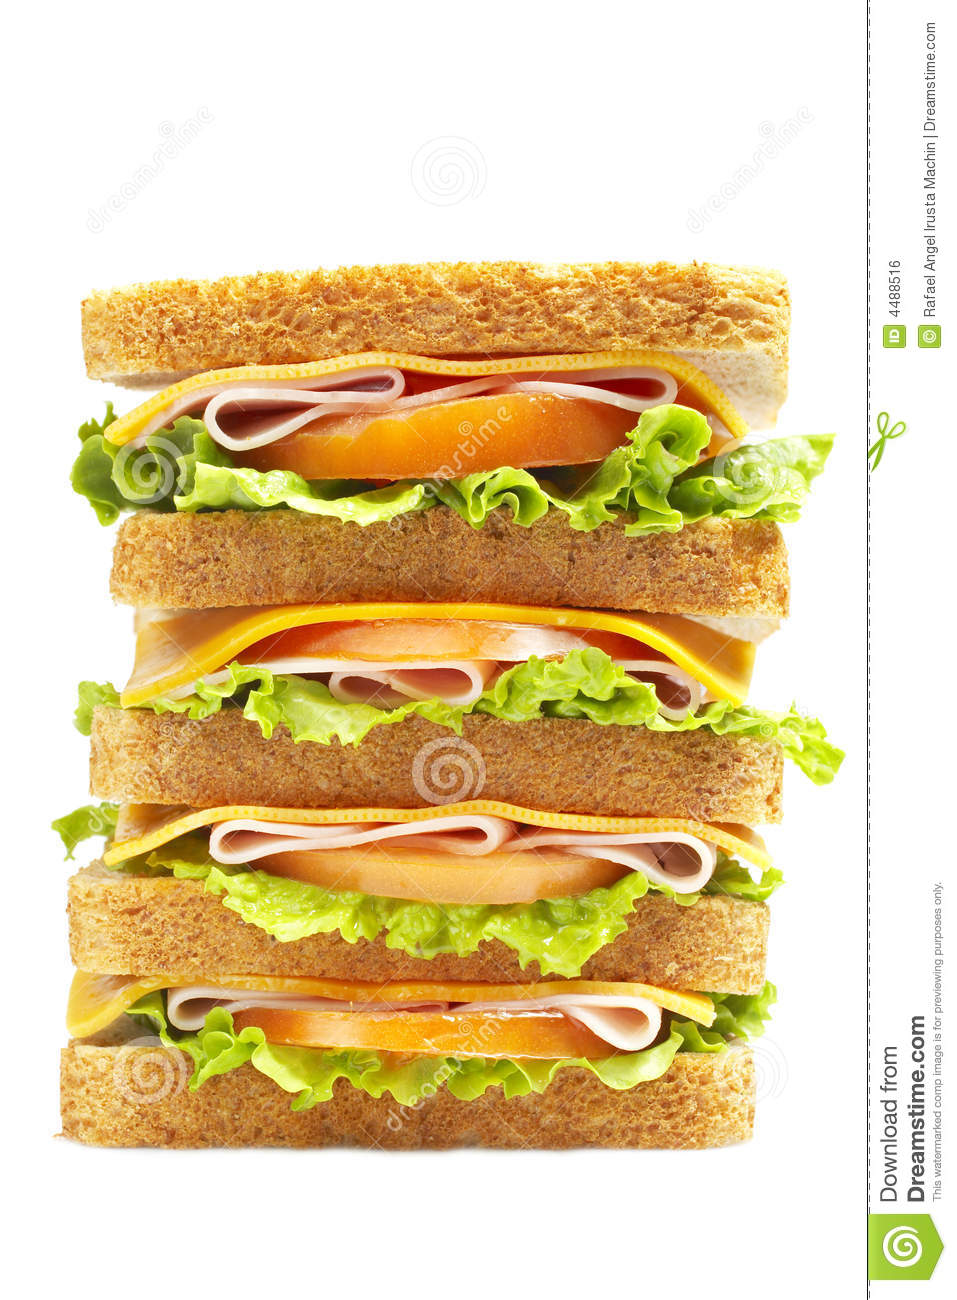 Healthy Ham Big Sandwich Royalty Free Stock Image   Image  4488516